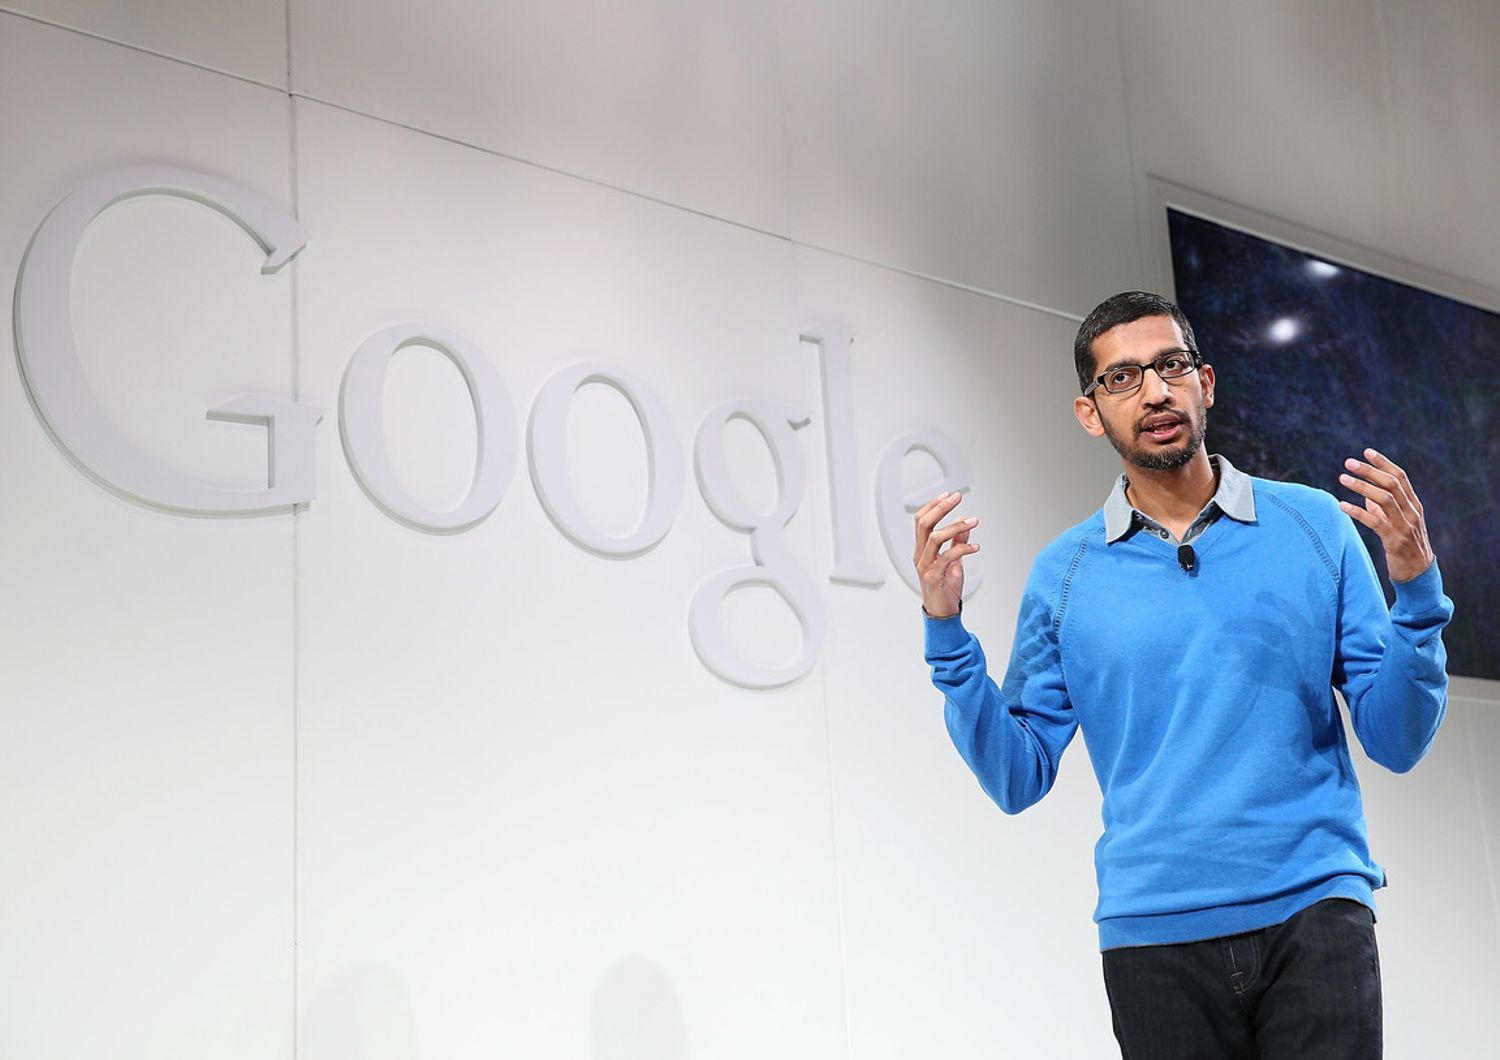 Sundar Pichai, Google's senior vice president